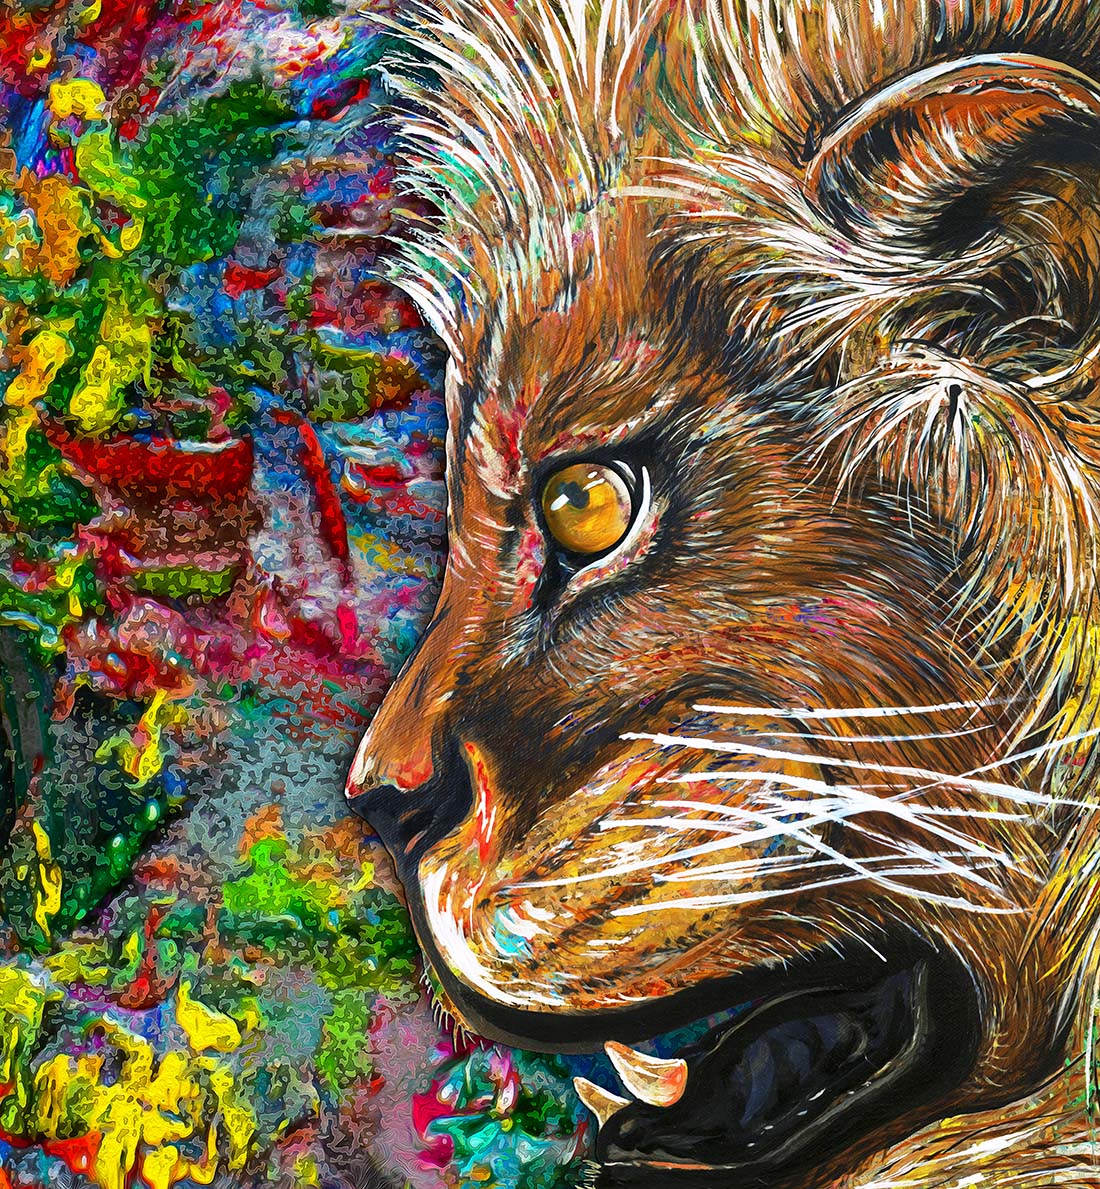 Fierce Lion mixed media art by Doug LaRue - Close Up